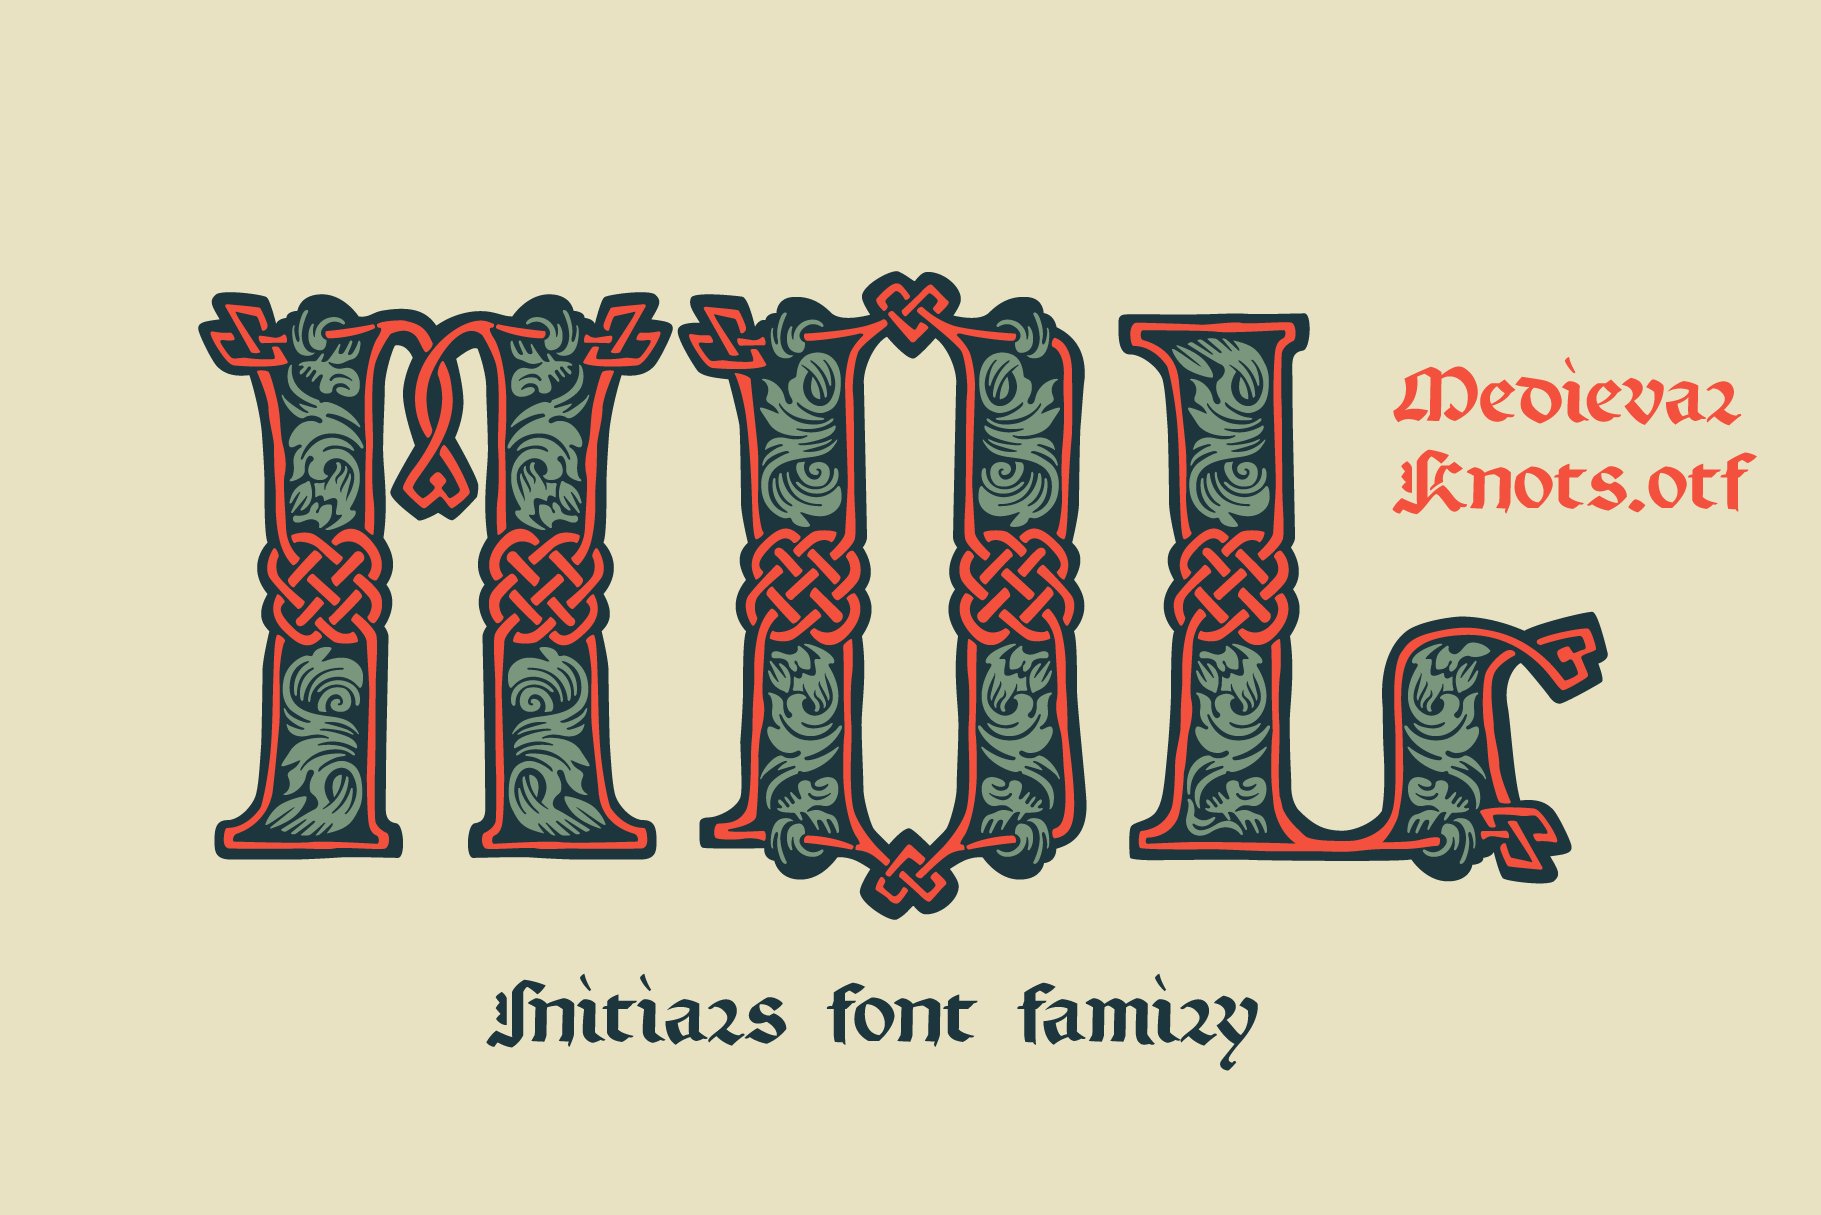 Medieval Knots Drop caps fontcover image.